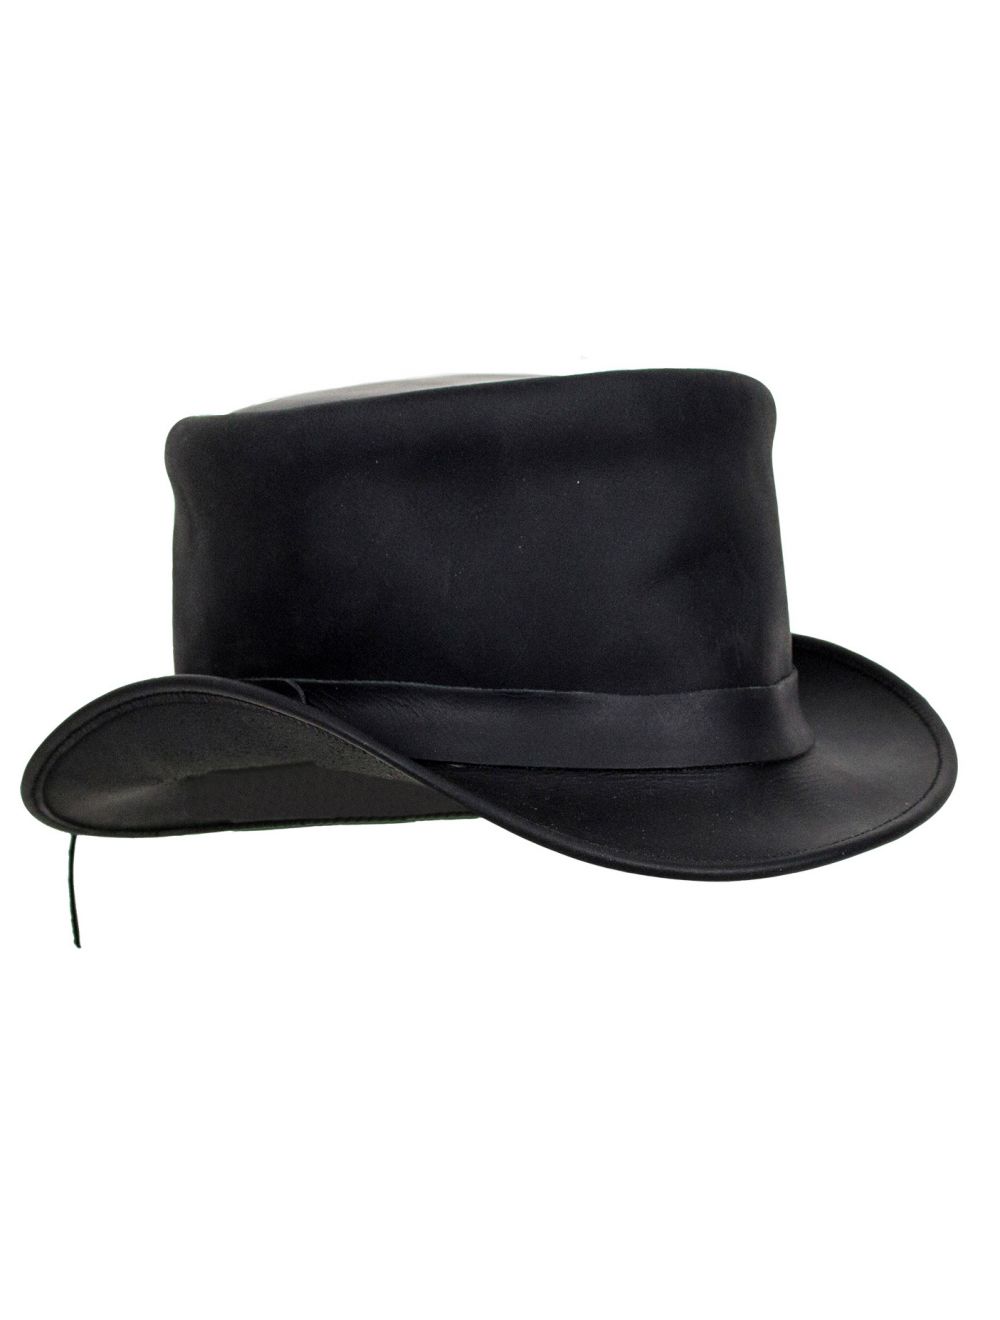 Black Leather Deadman's Top Man Hat